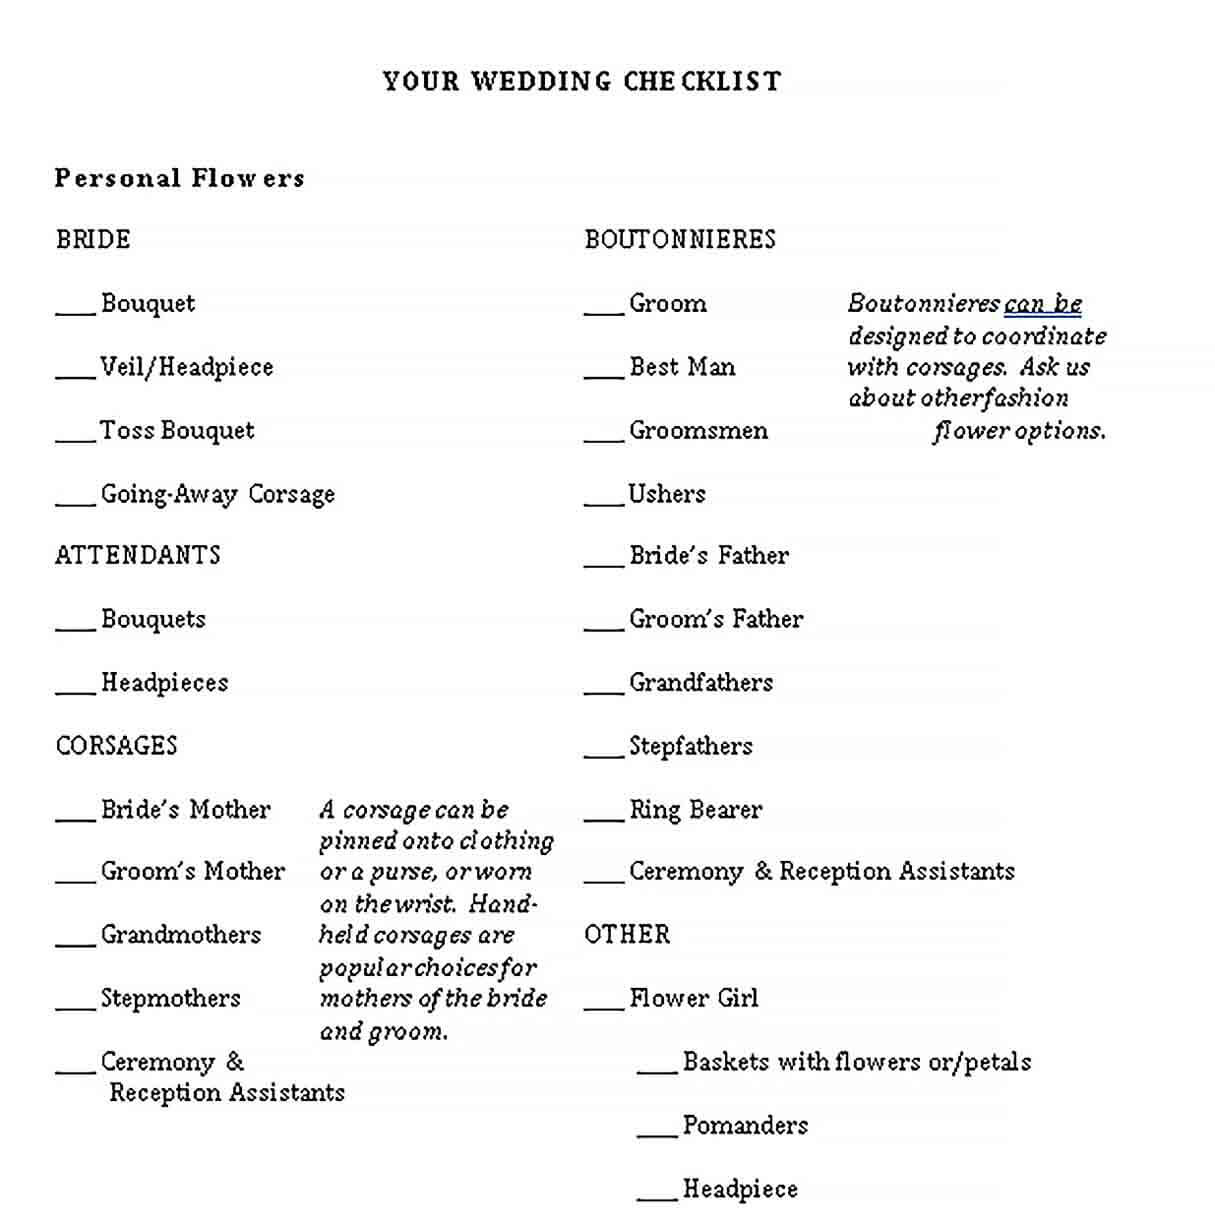 Sample Wedding Day Checklist